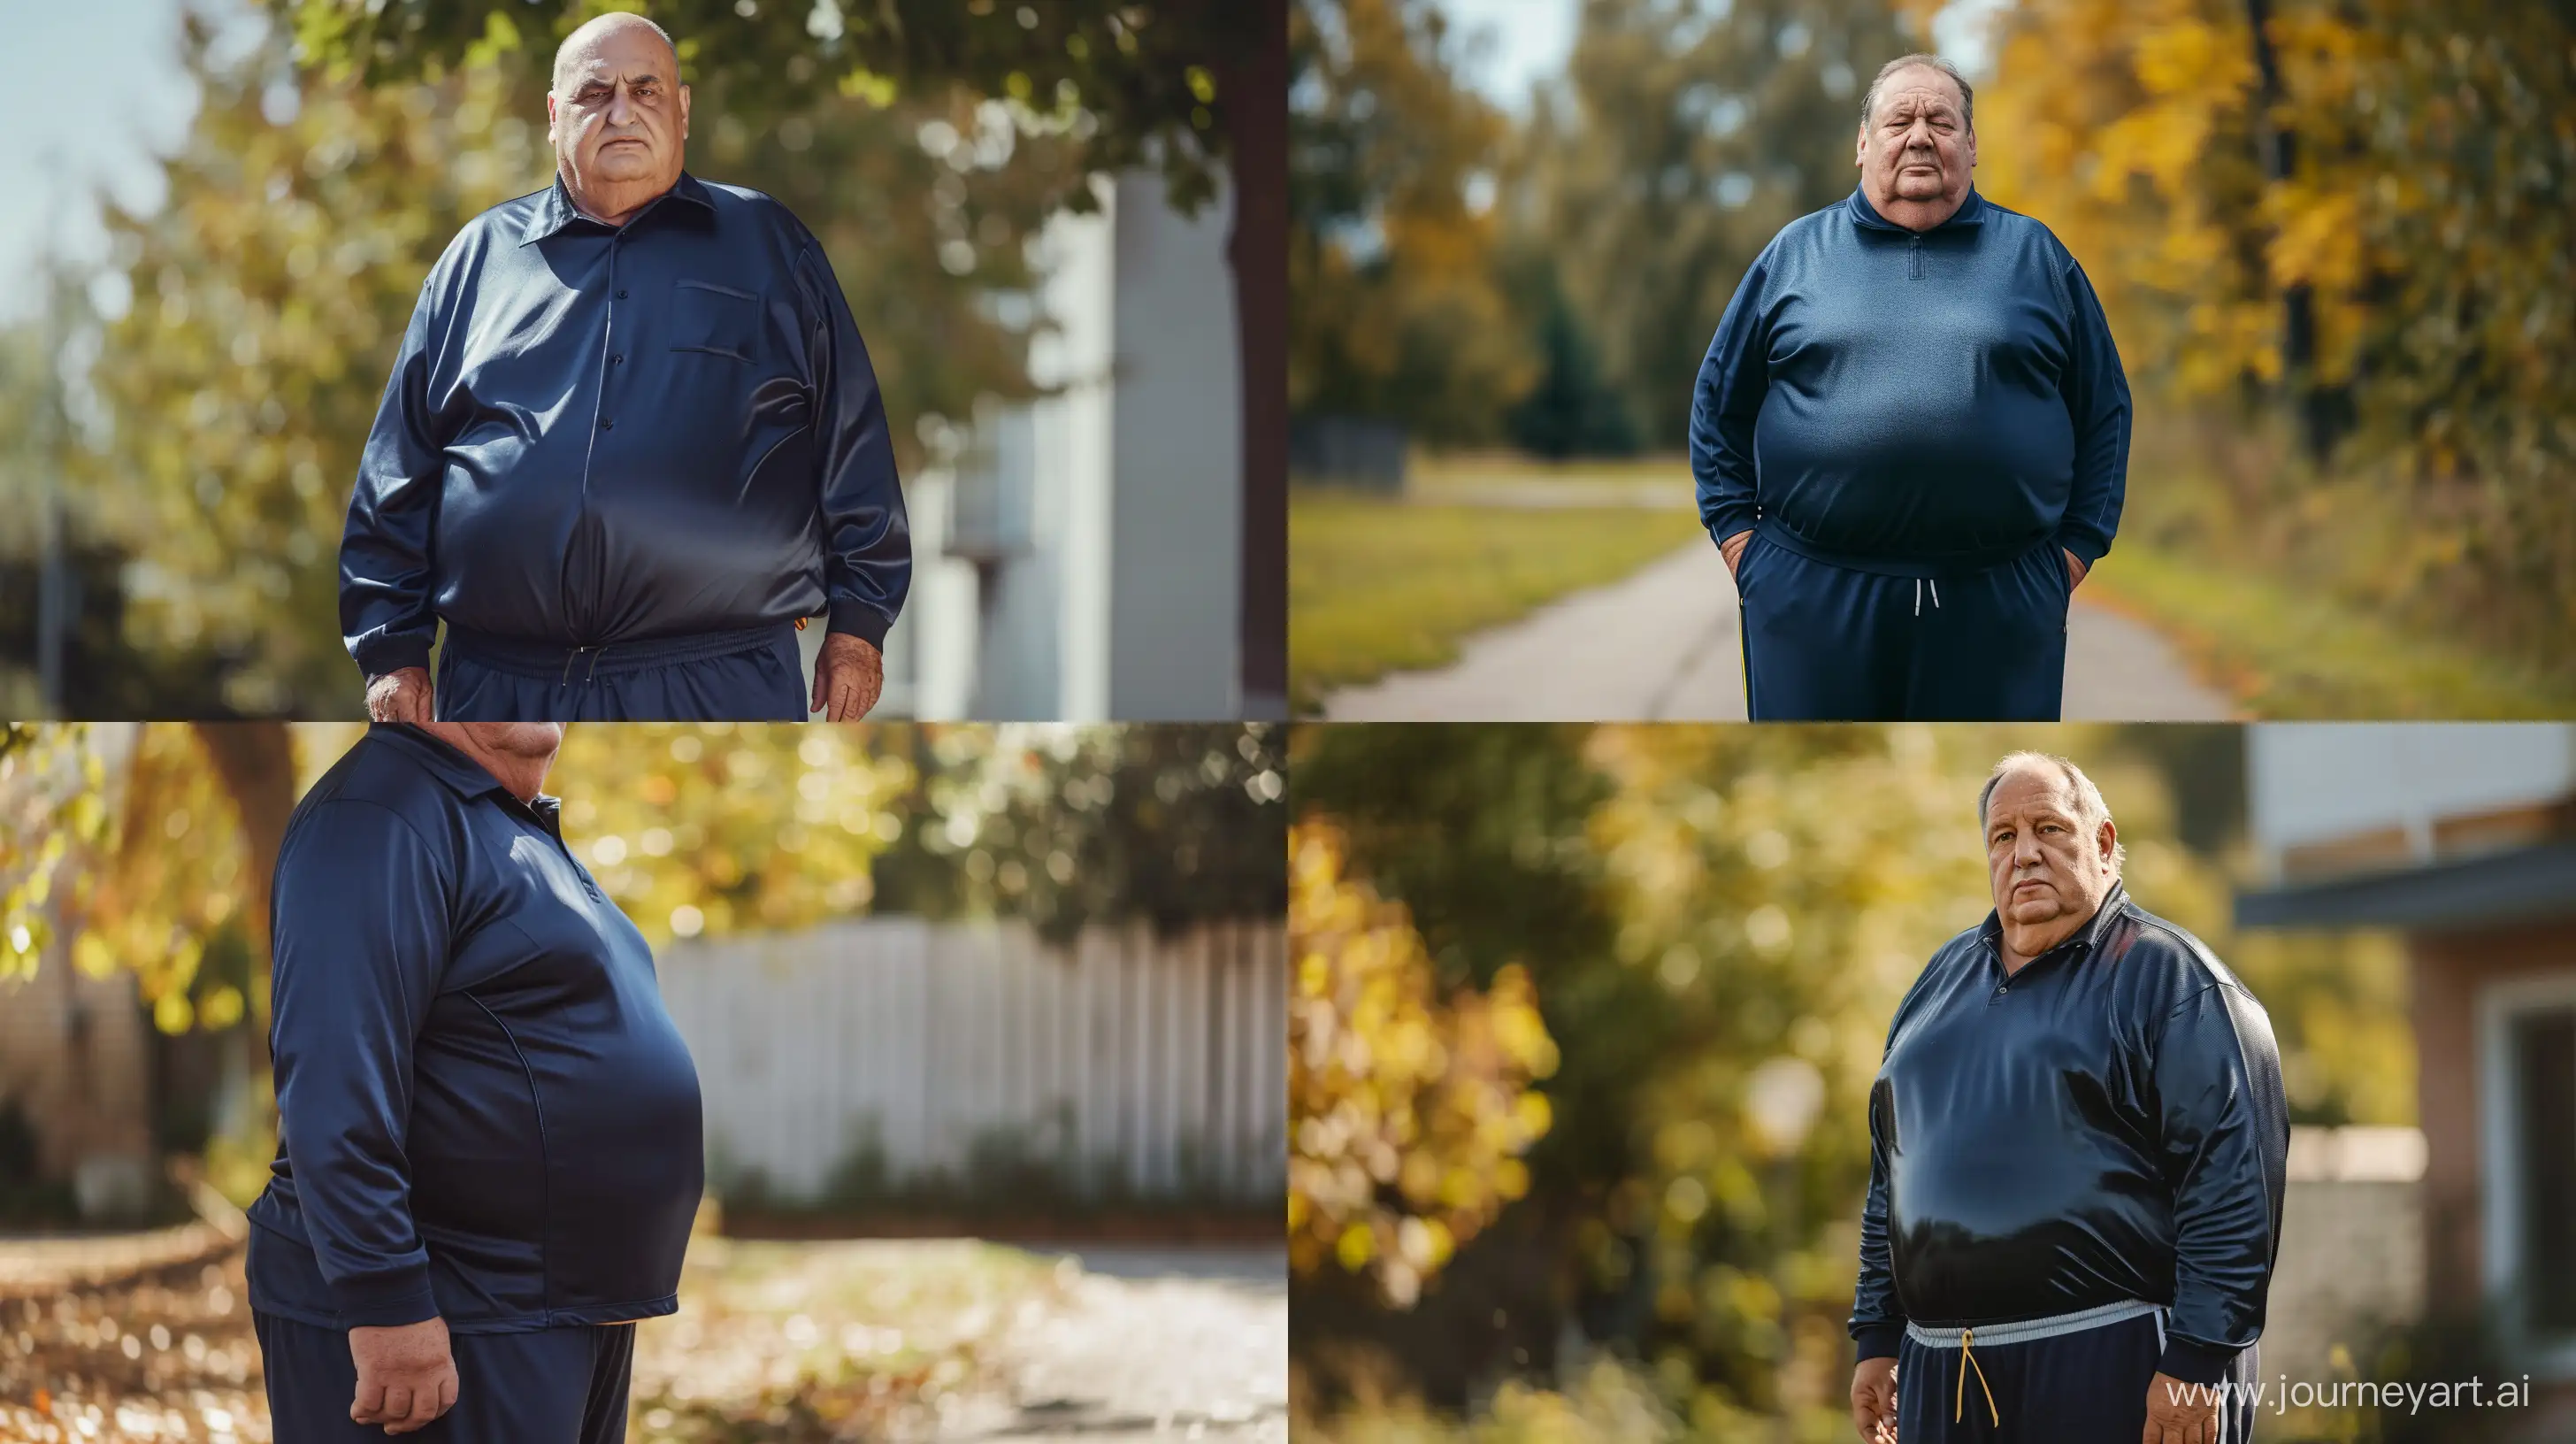 Elderly-Fitness-Enthusiast-in-Stylish-Navy-Sportswear-Outdoors